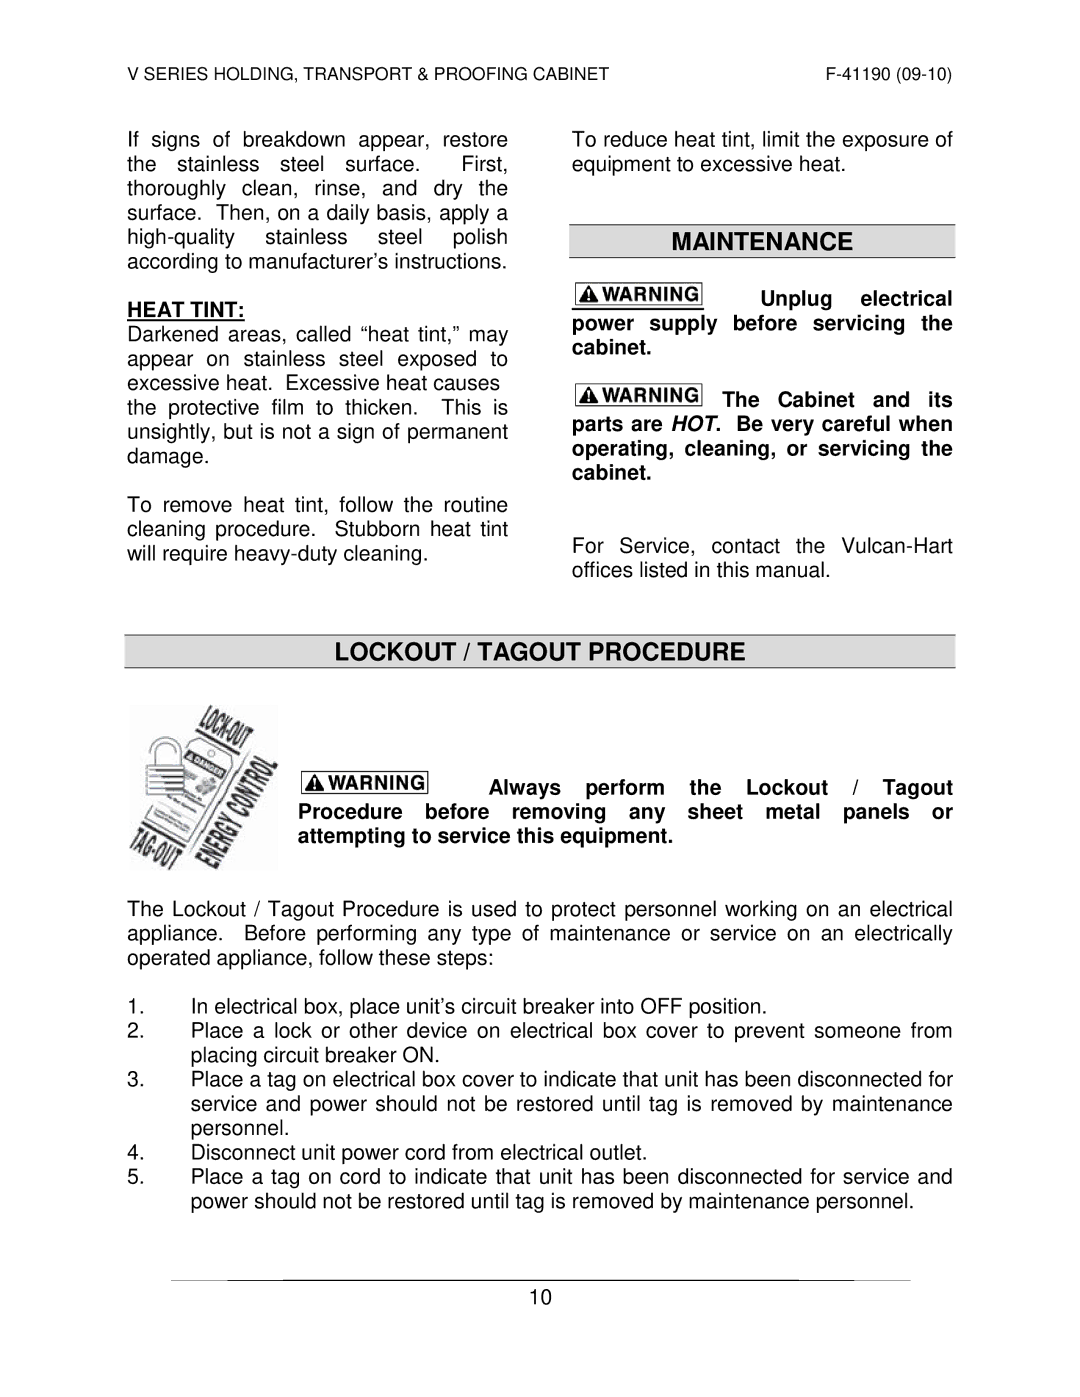 Vulcan-Hart VP18 ML-138089 operation manual Maintenance, Lockout / Tagout Procedure, Heat Tint 